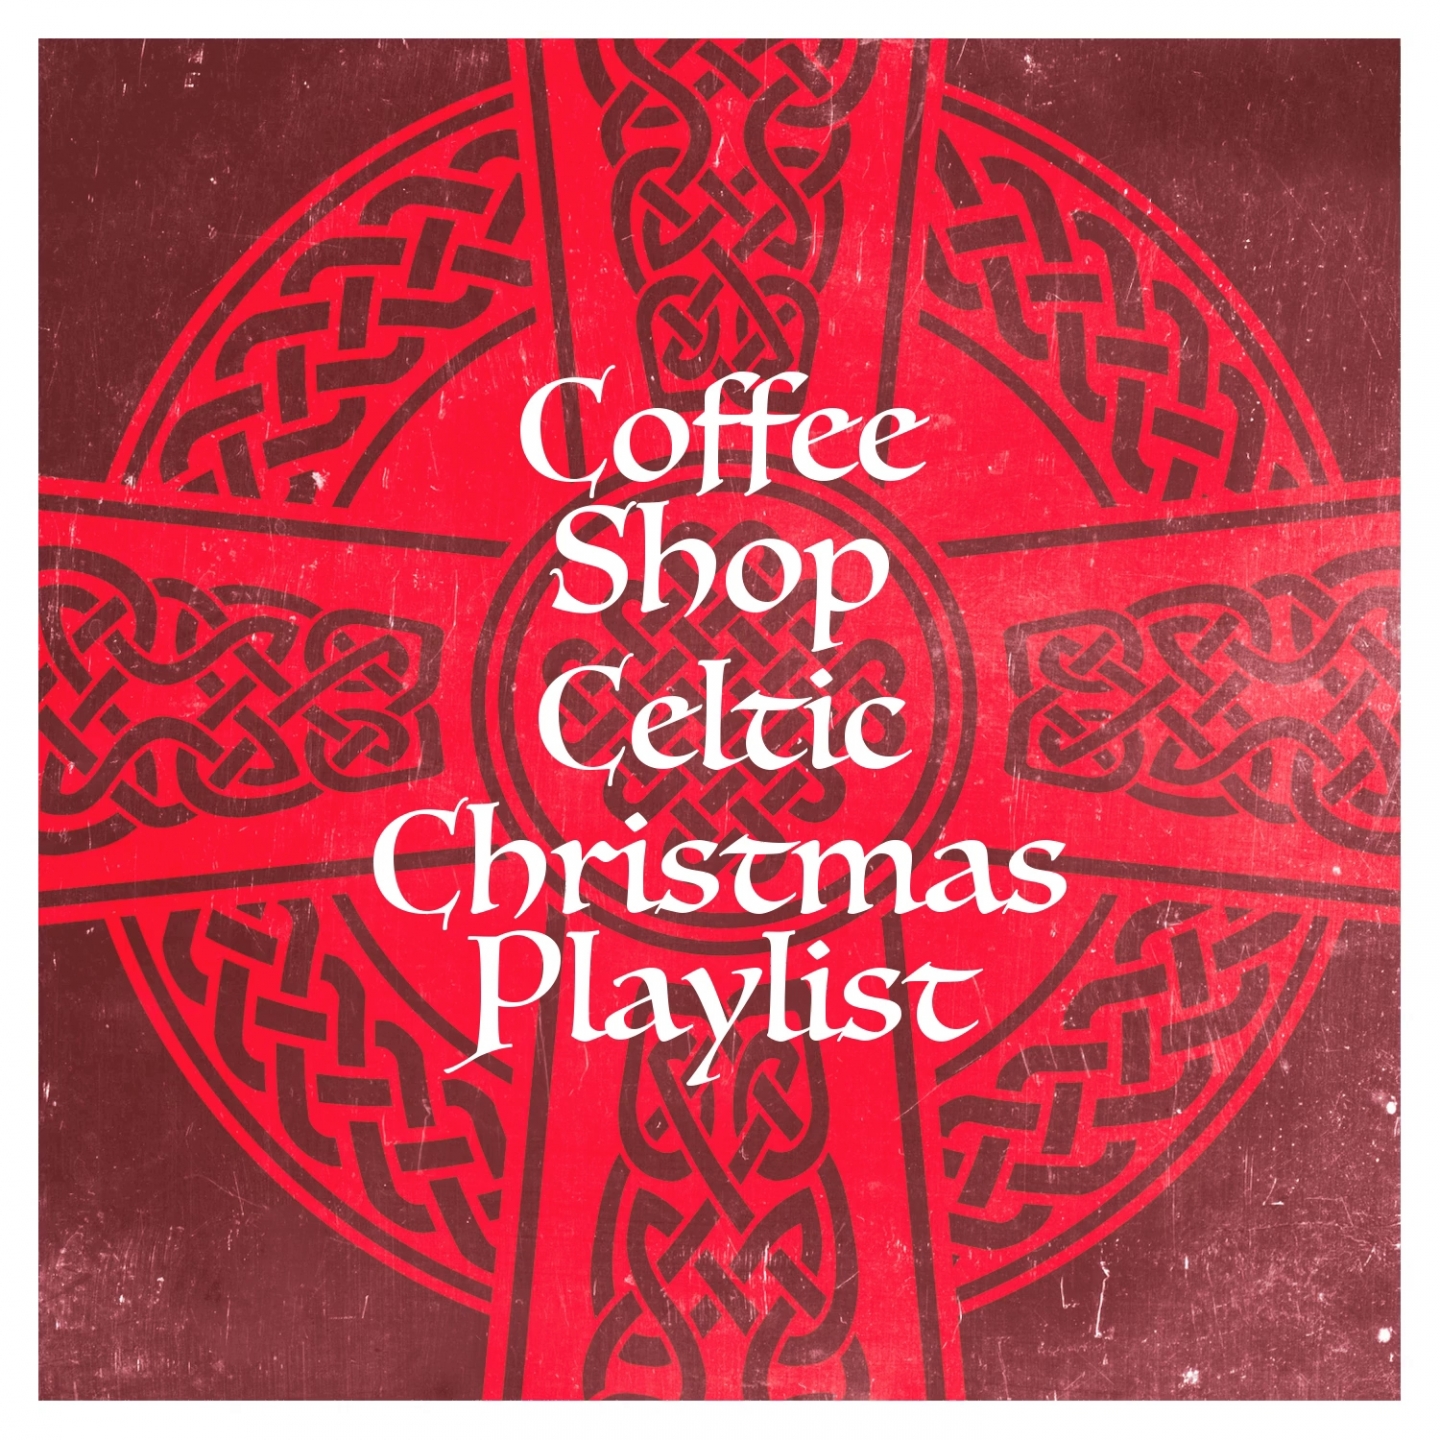 Coffee Shop Celtic Christmas Playlist